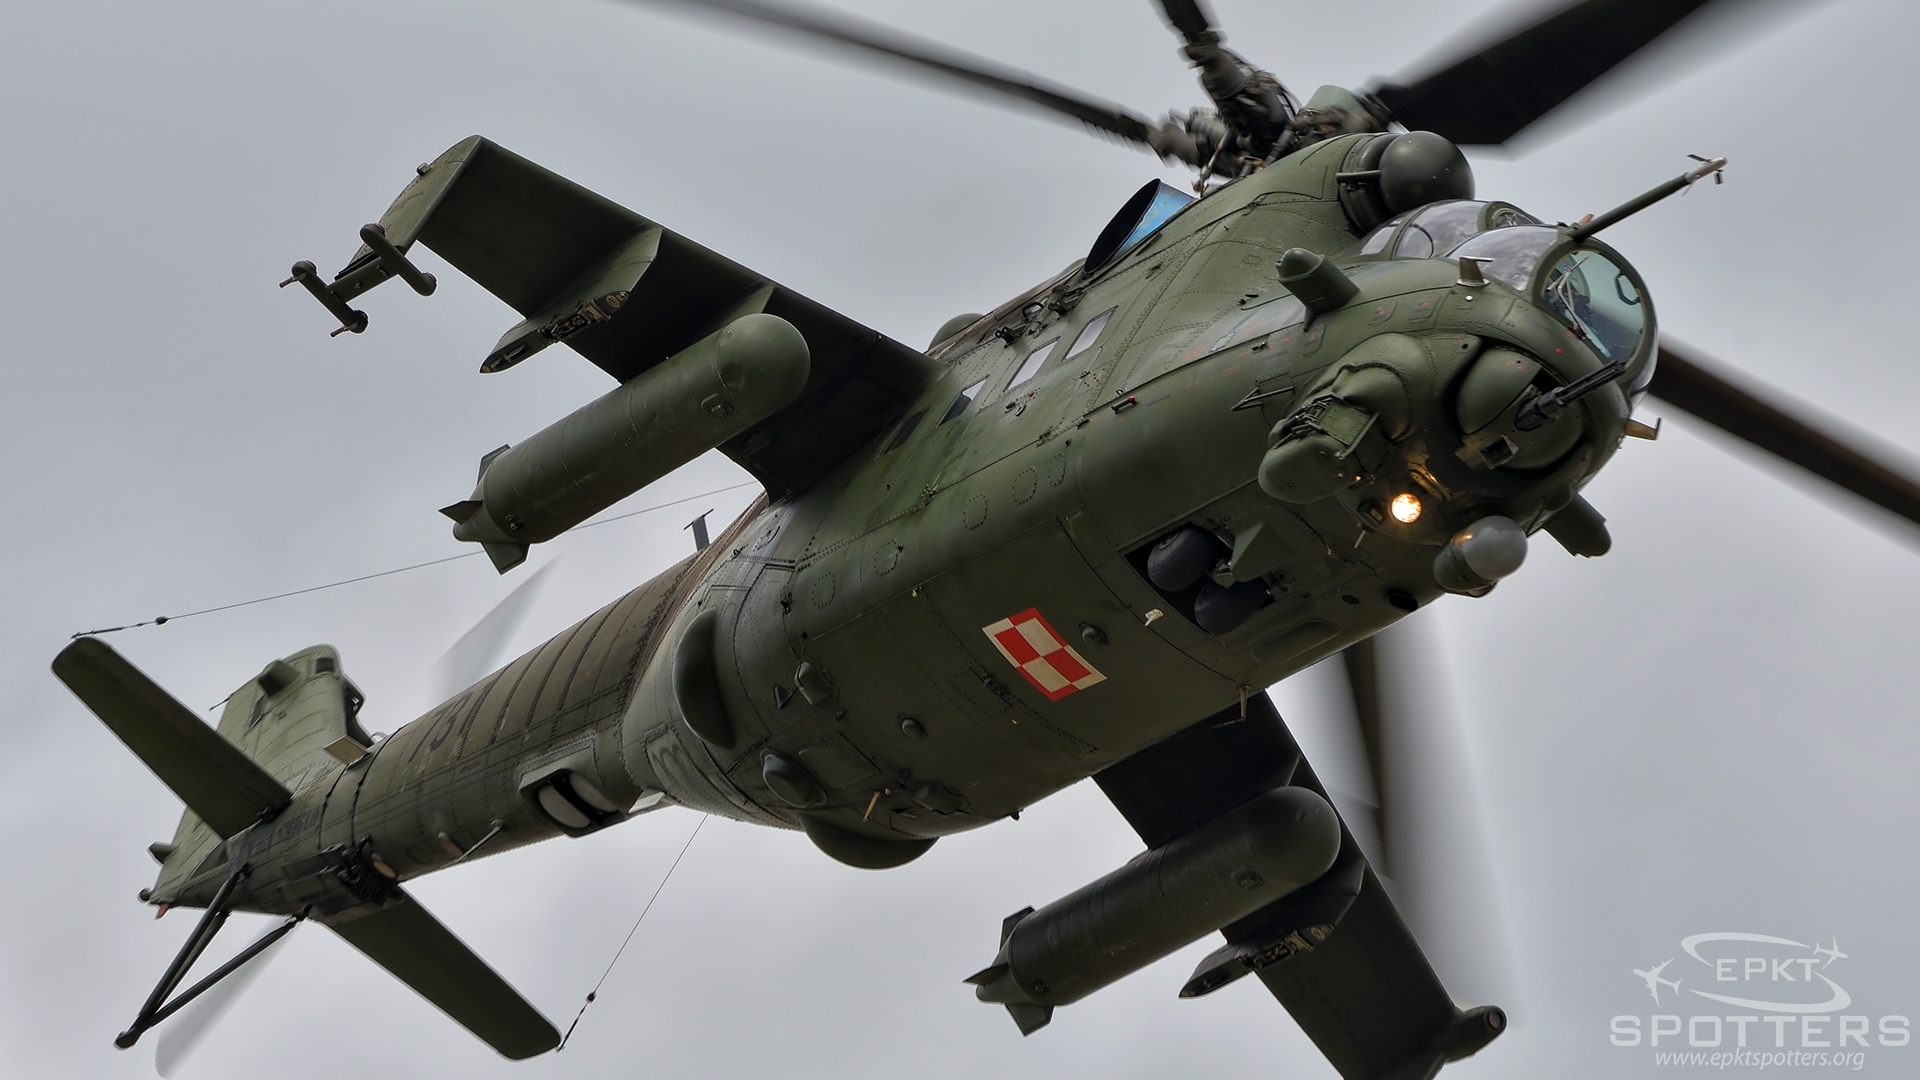 731 - Mil Mi-24 V Hind E (Poland - Army) / Kraków-Czyżyny - Kraków Poland [EPKC/]